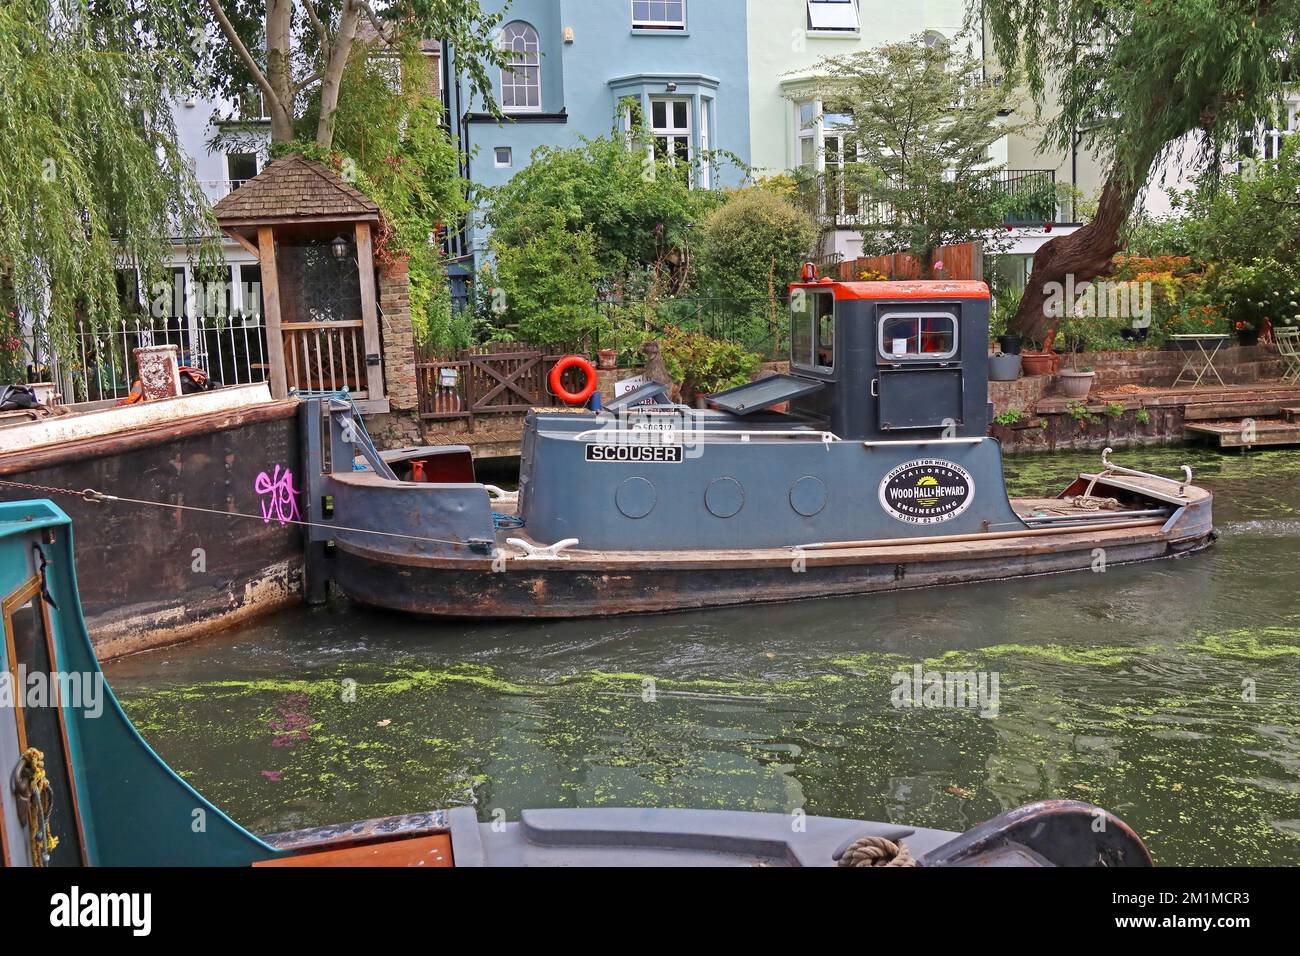 Scouser ,canal working boat - Regents Canal - Wood hall & Heward Ltd, Camden, London, England, UK Stock Photo